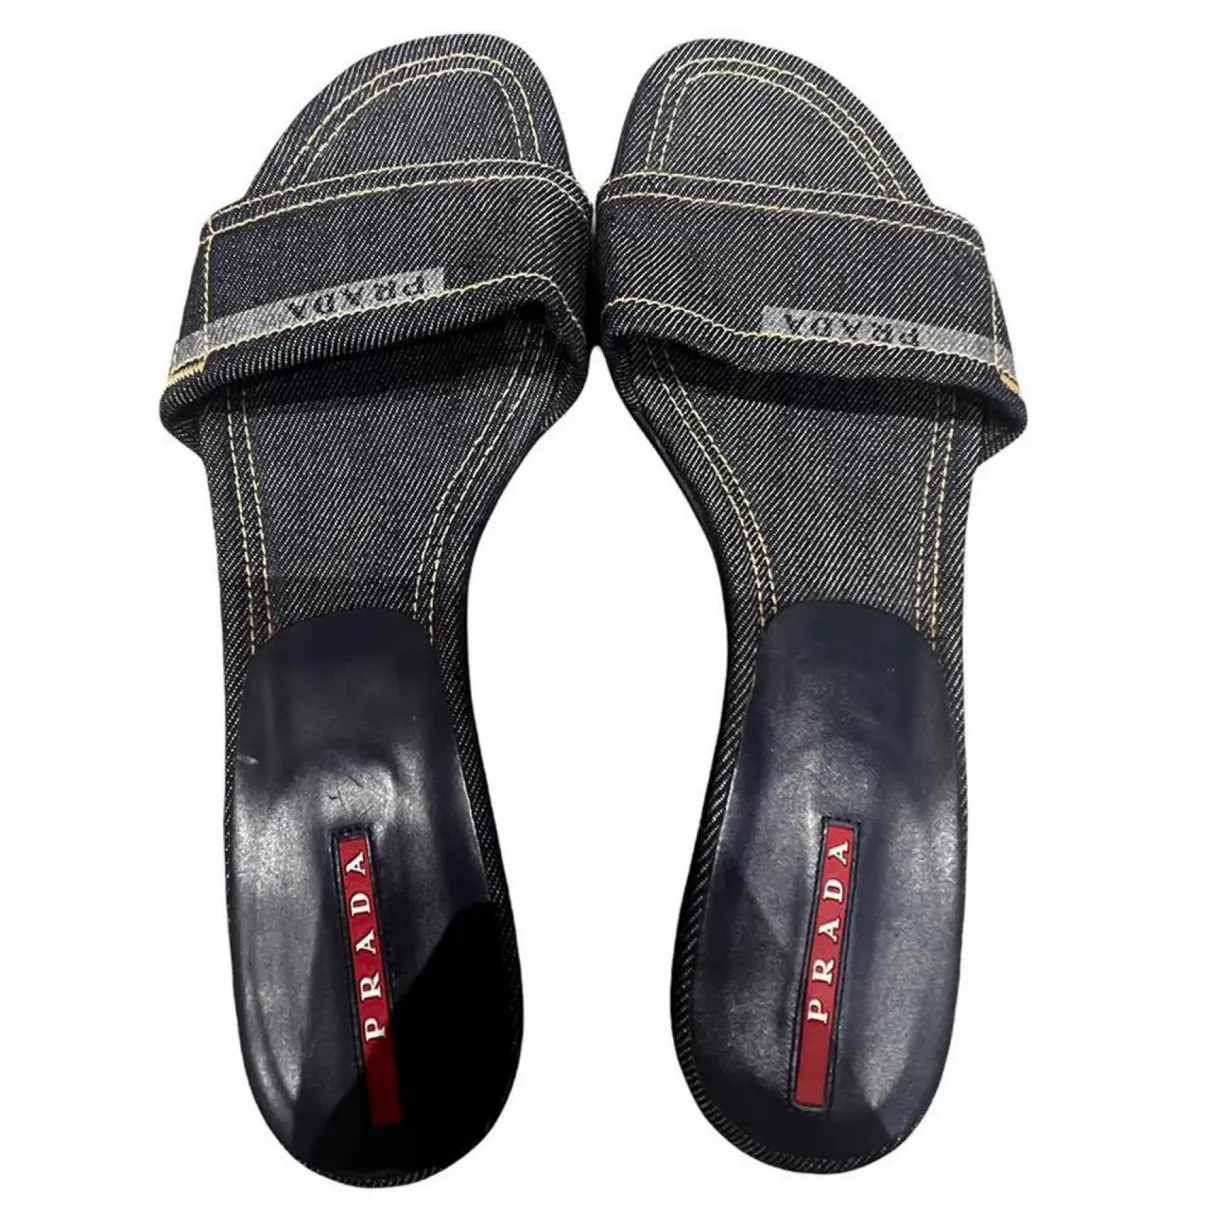 Buy Prada Leather sandal online